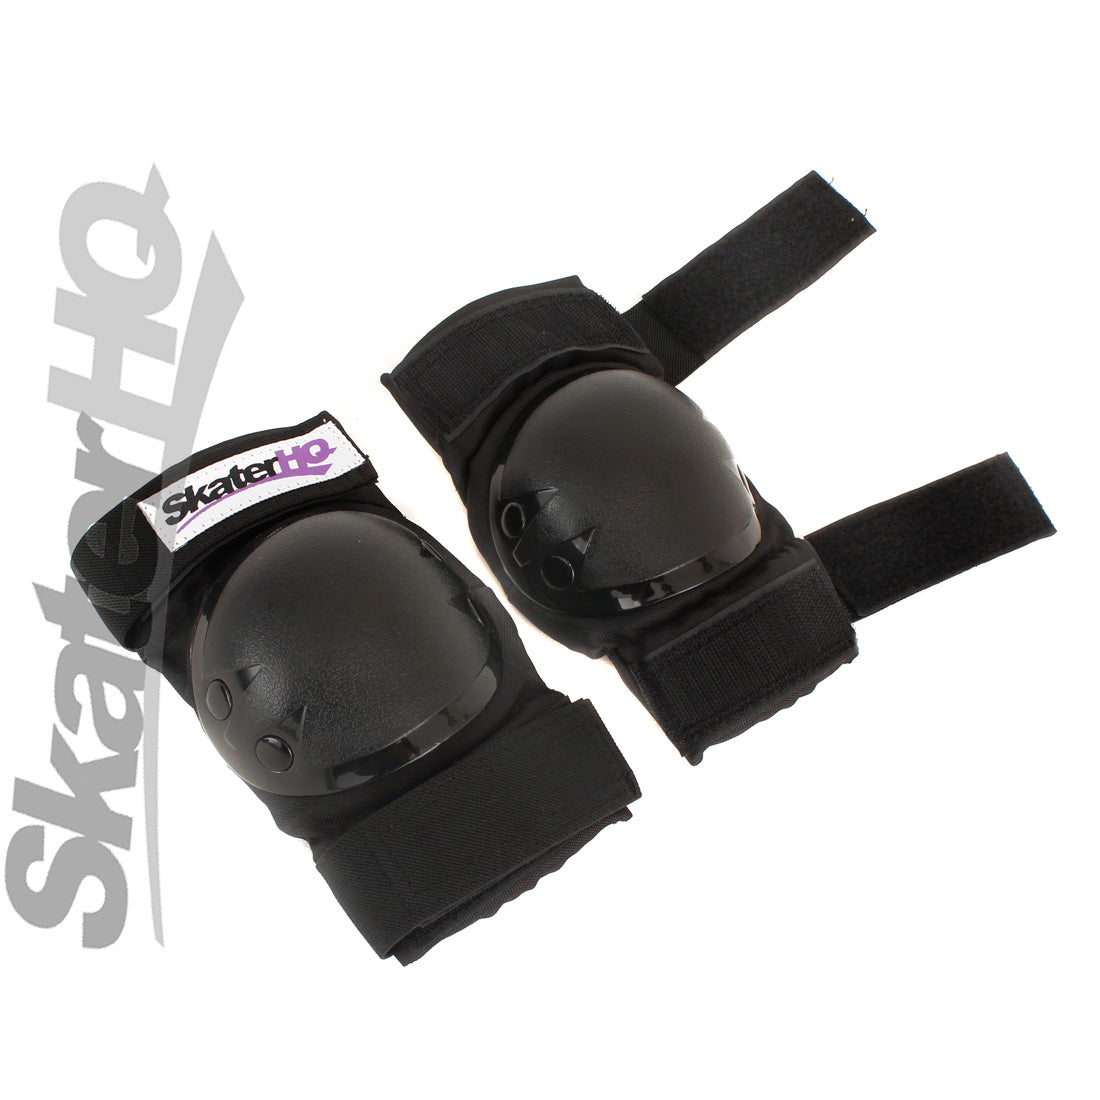 Skater HQ Tri Pack - Medium Protective Gear